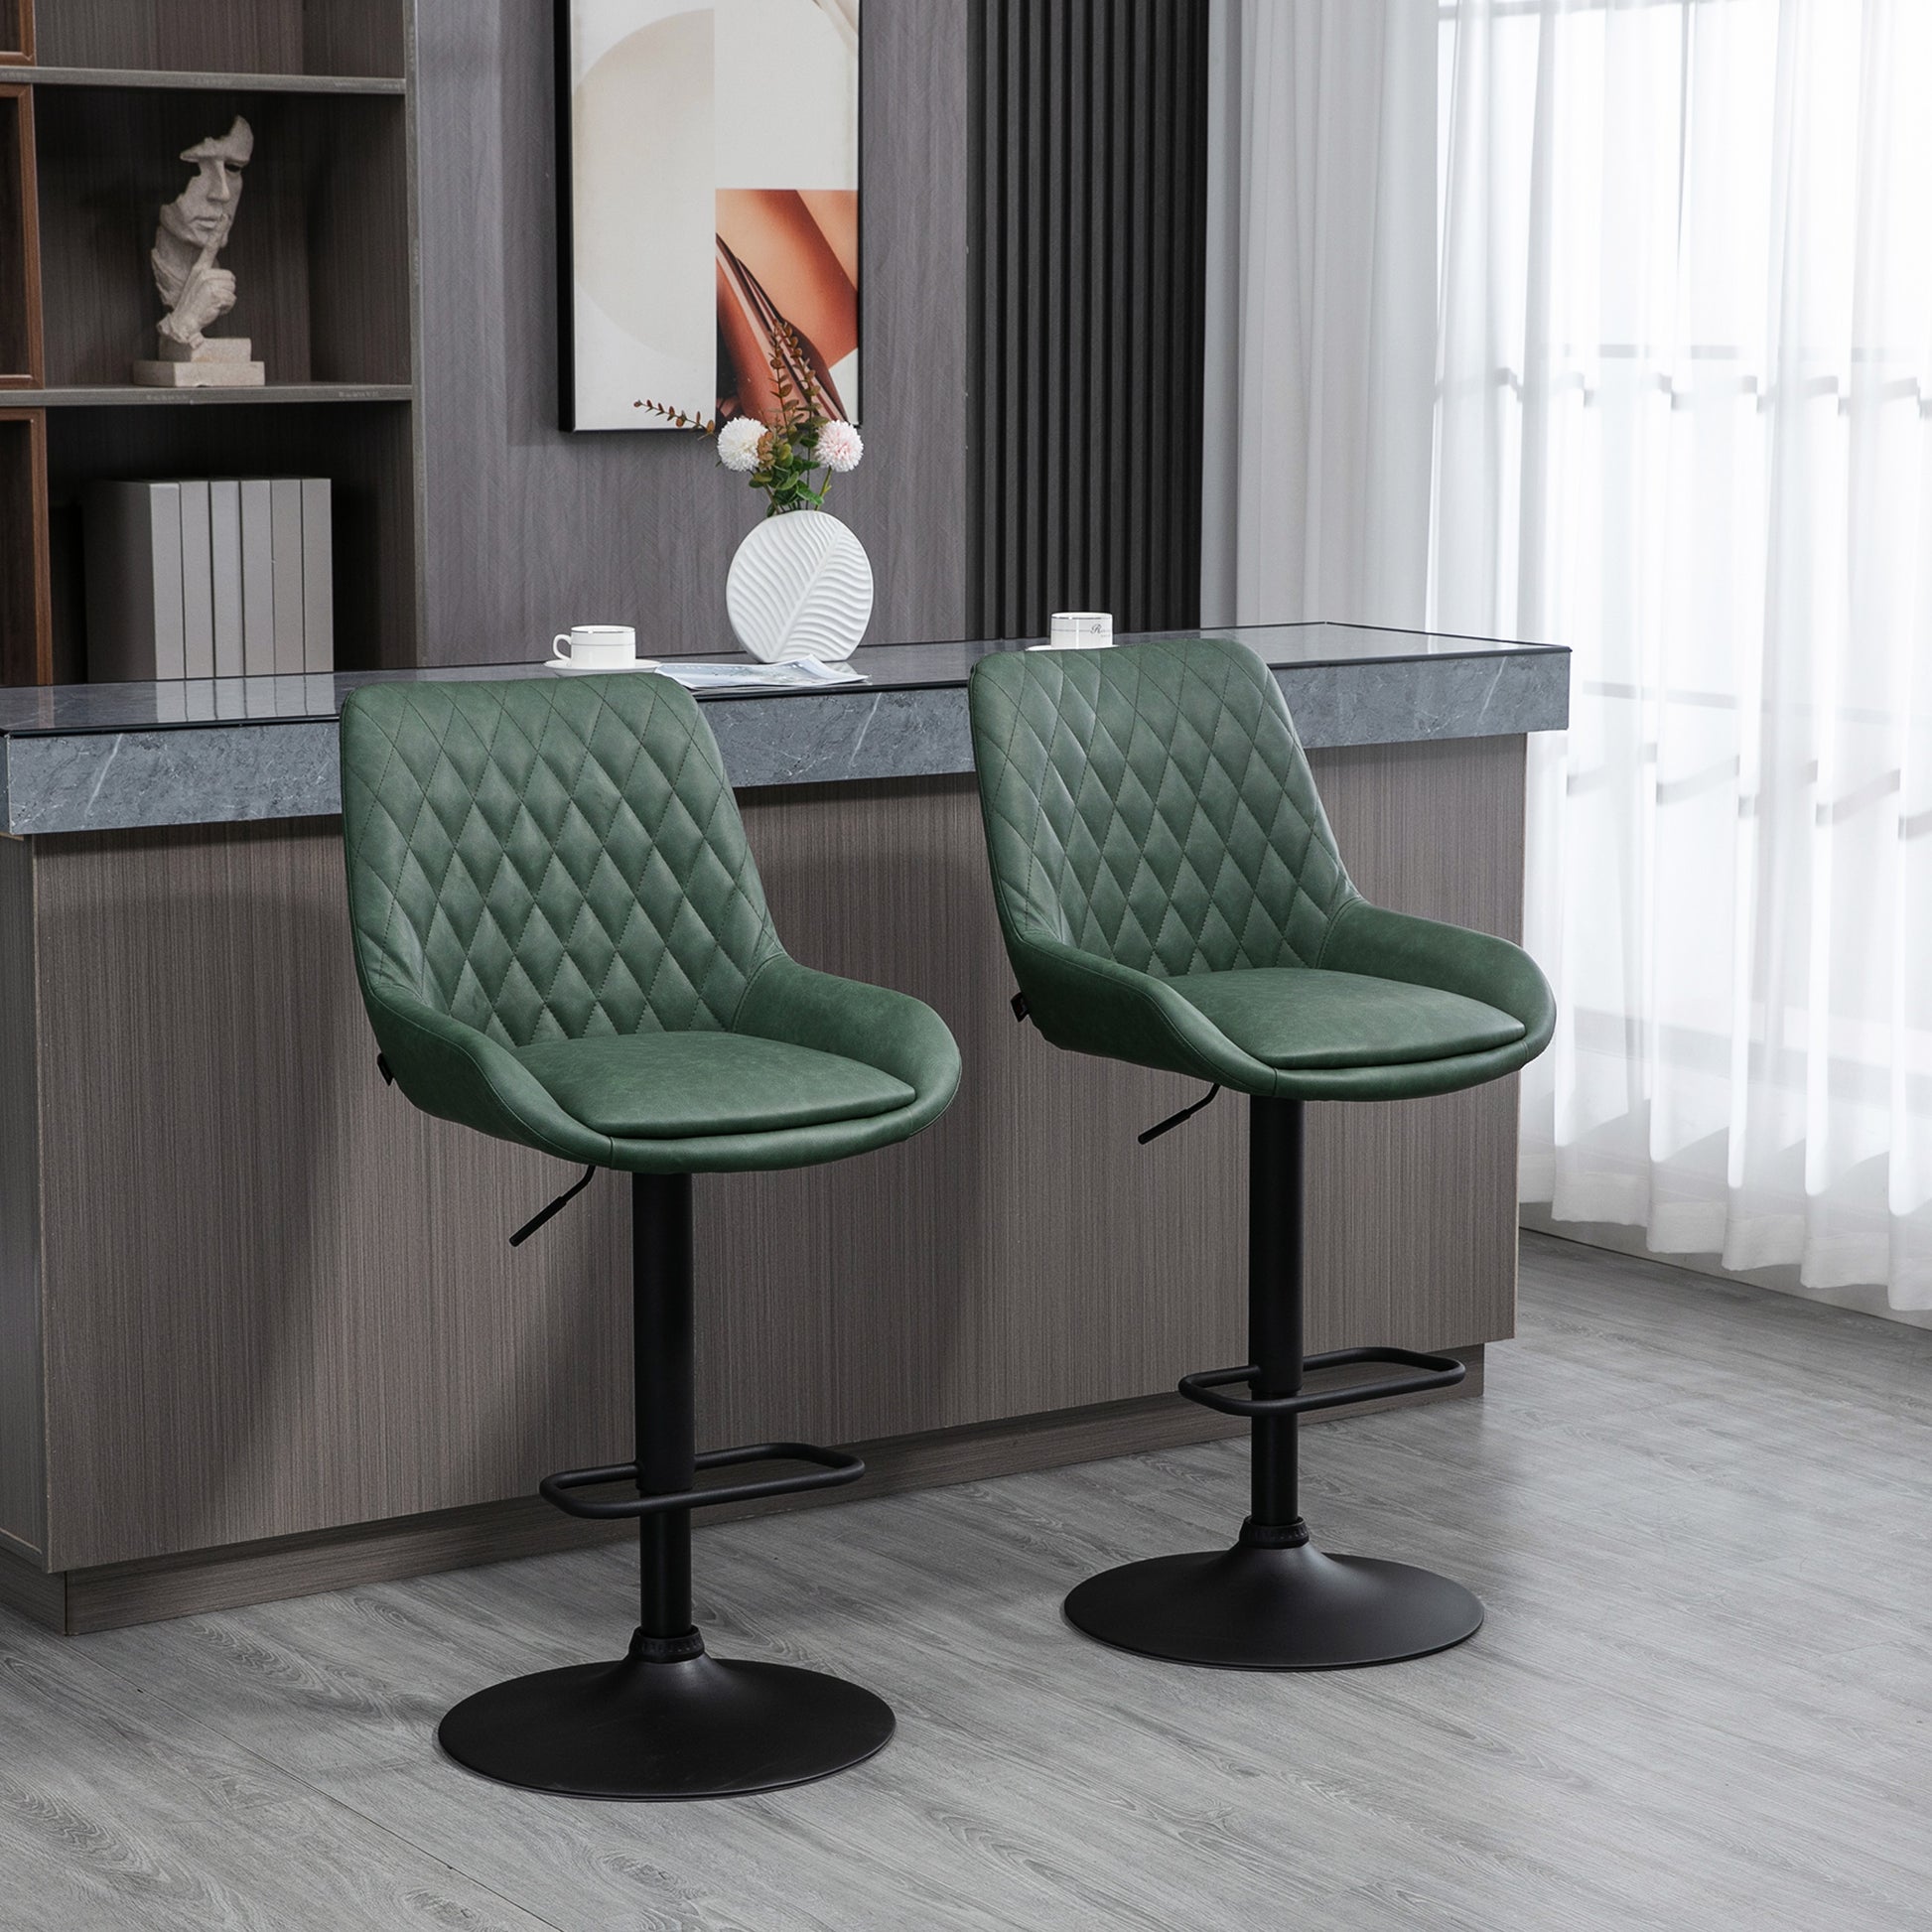 Homcom Retro Bar Stools Set Of 2 Adjustable Kitchen Stool Upholstered Bar Chairs With Back Swivel Seat Dark Green